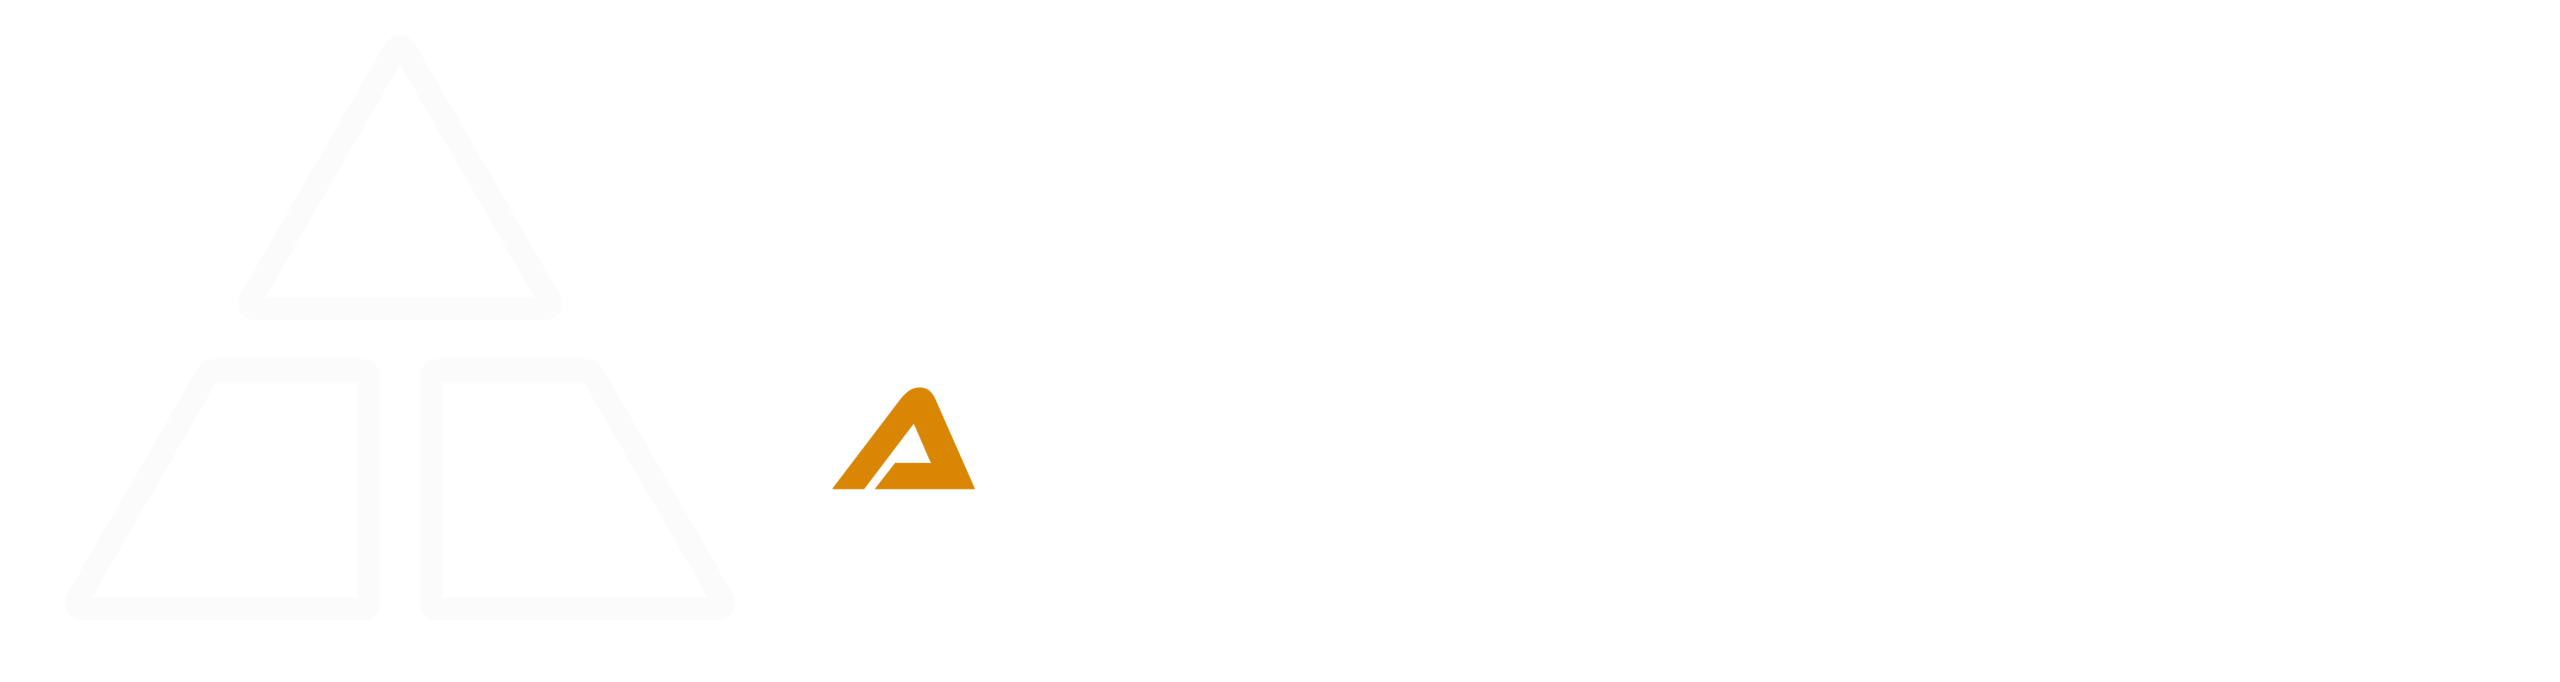 Archi Texture AA web logo